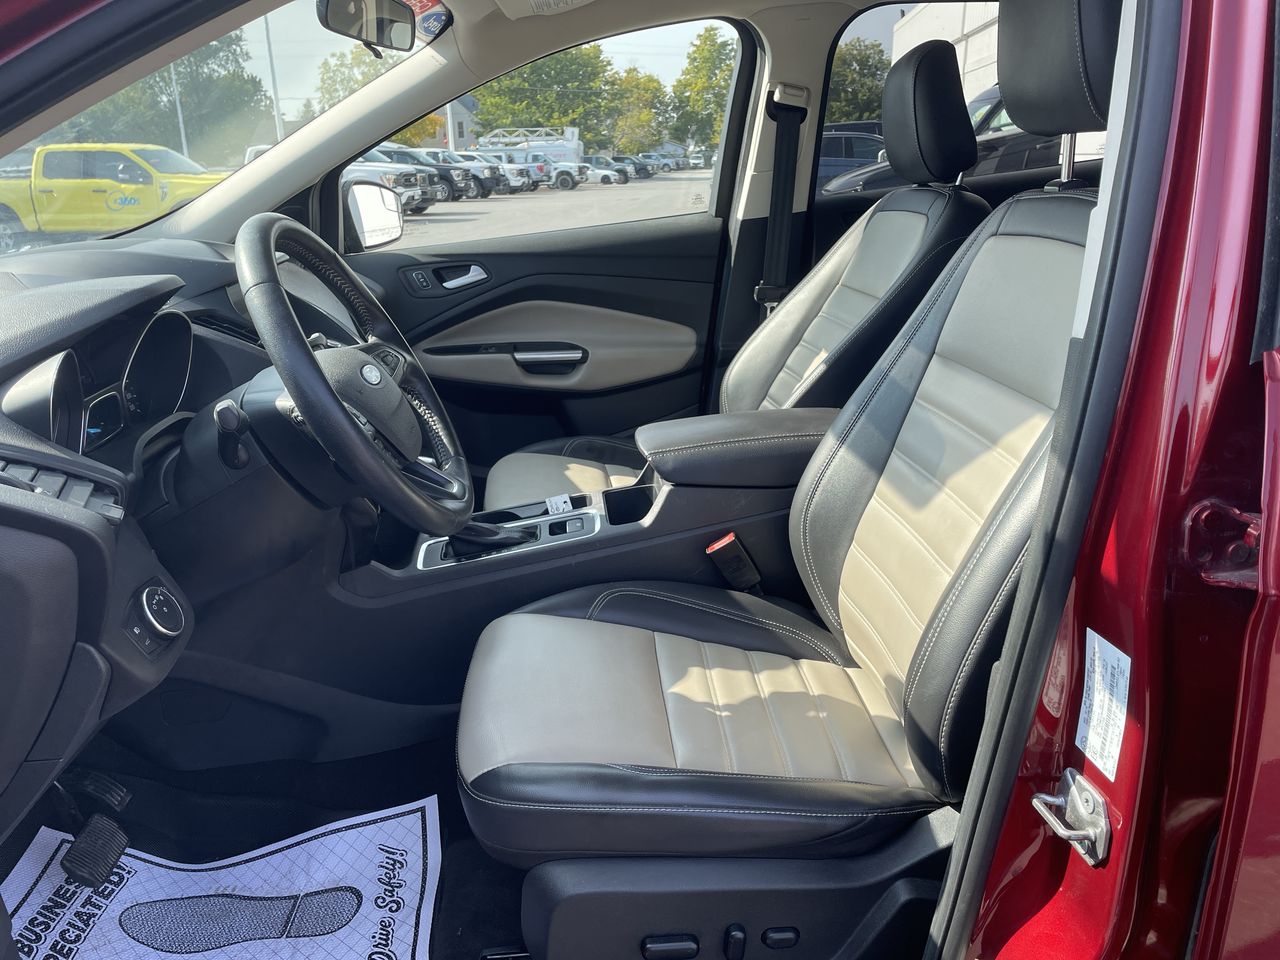 2019 Ford Escape - 21309A Full Image 11